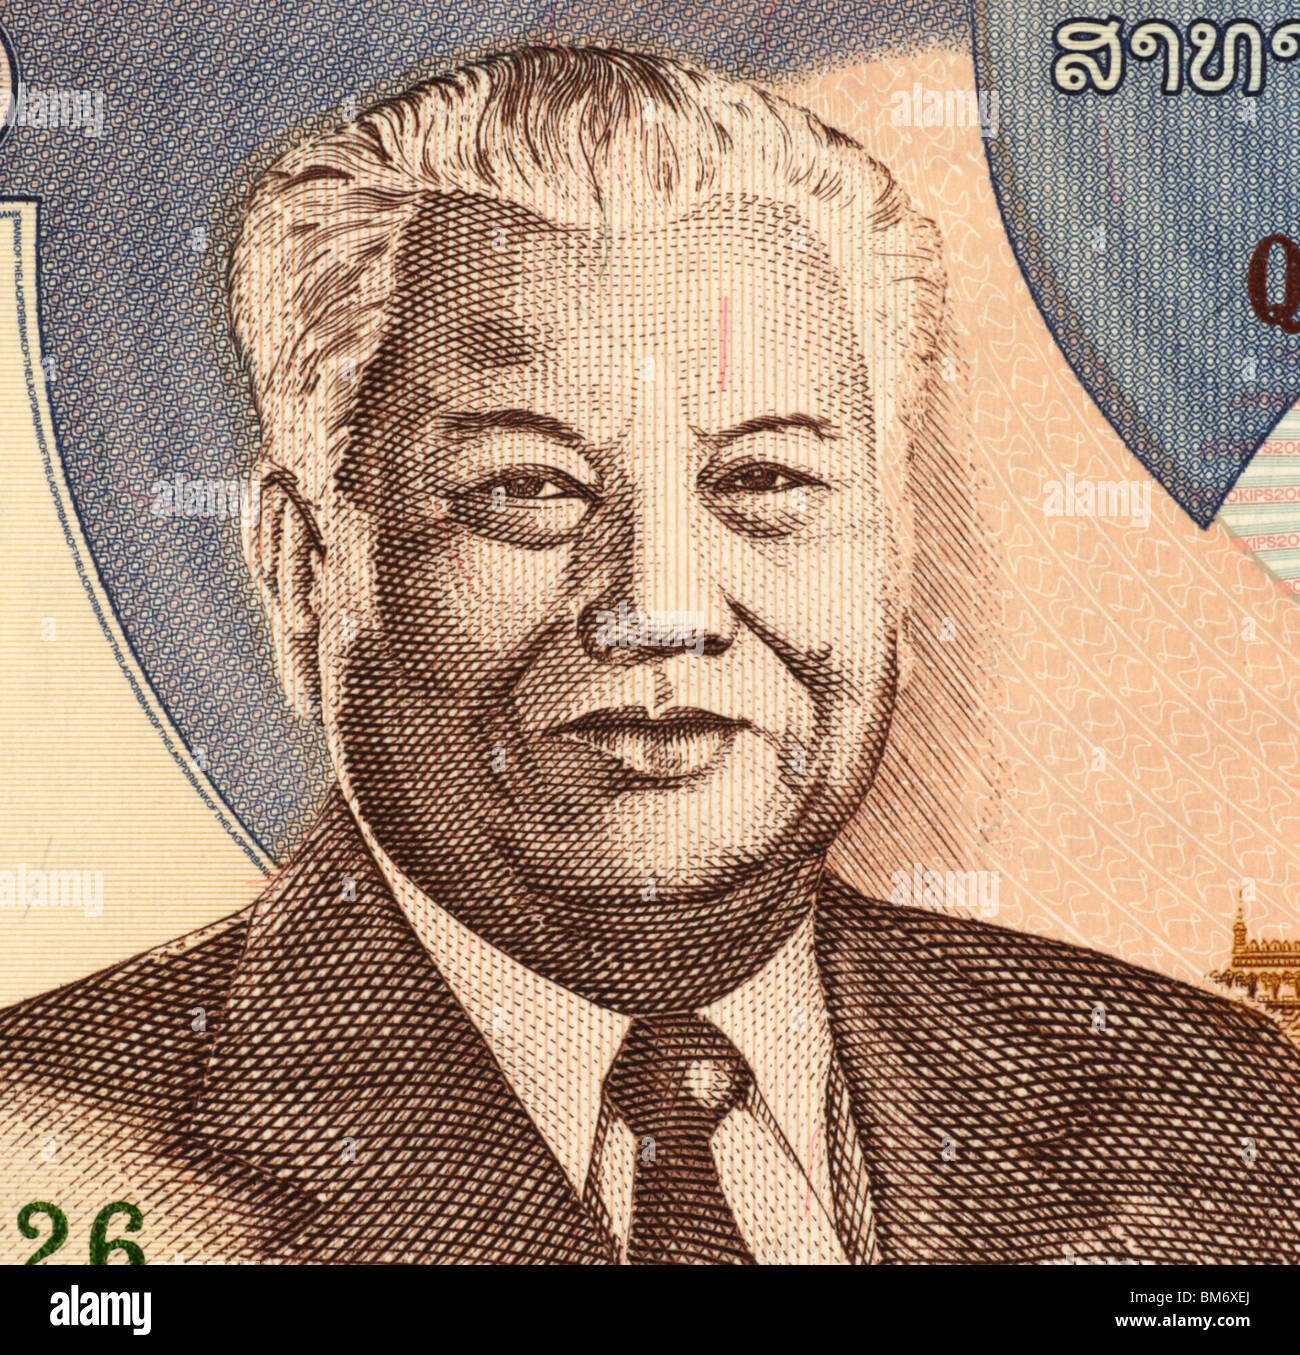 Kaysone Phomvihane (1920-1992) on 2000 Kip 2003 Banknote from Laos. Political leader of Laos. Stock Photo